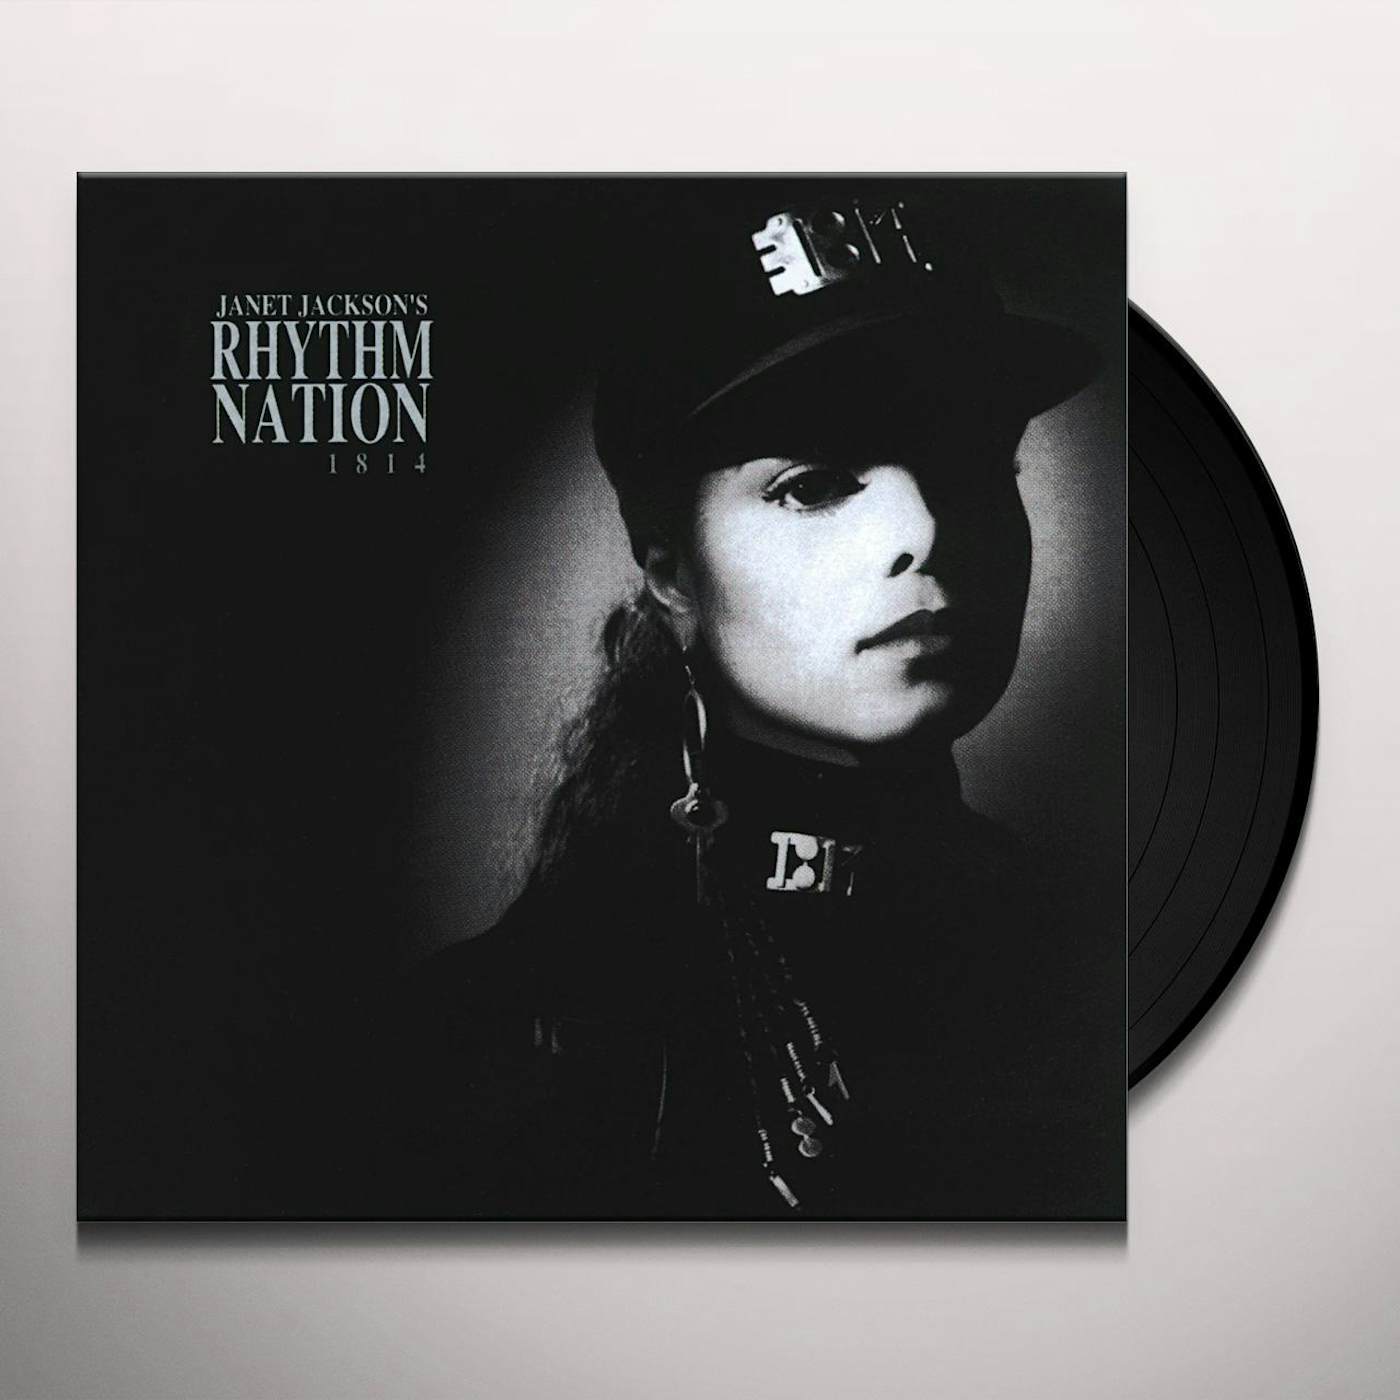 JANET JACKSON'S RHYTHM NATION 1814 (2 LP) Vinyl Record